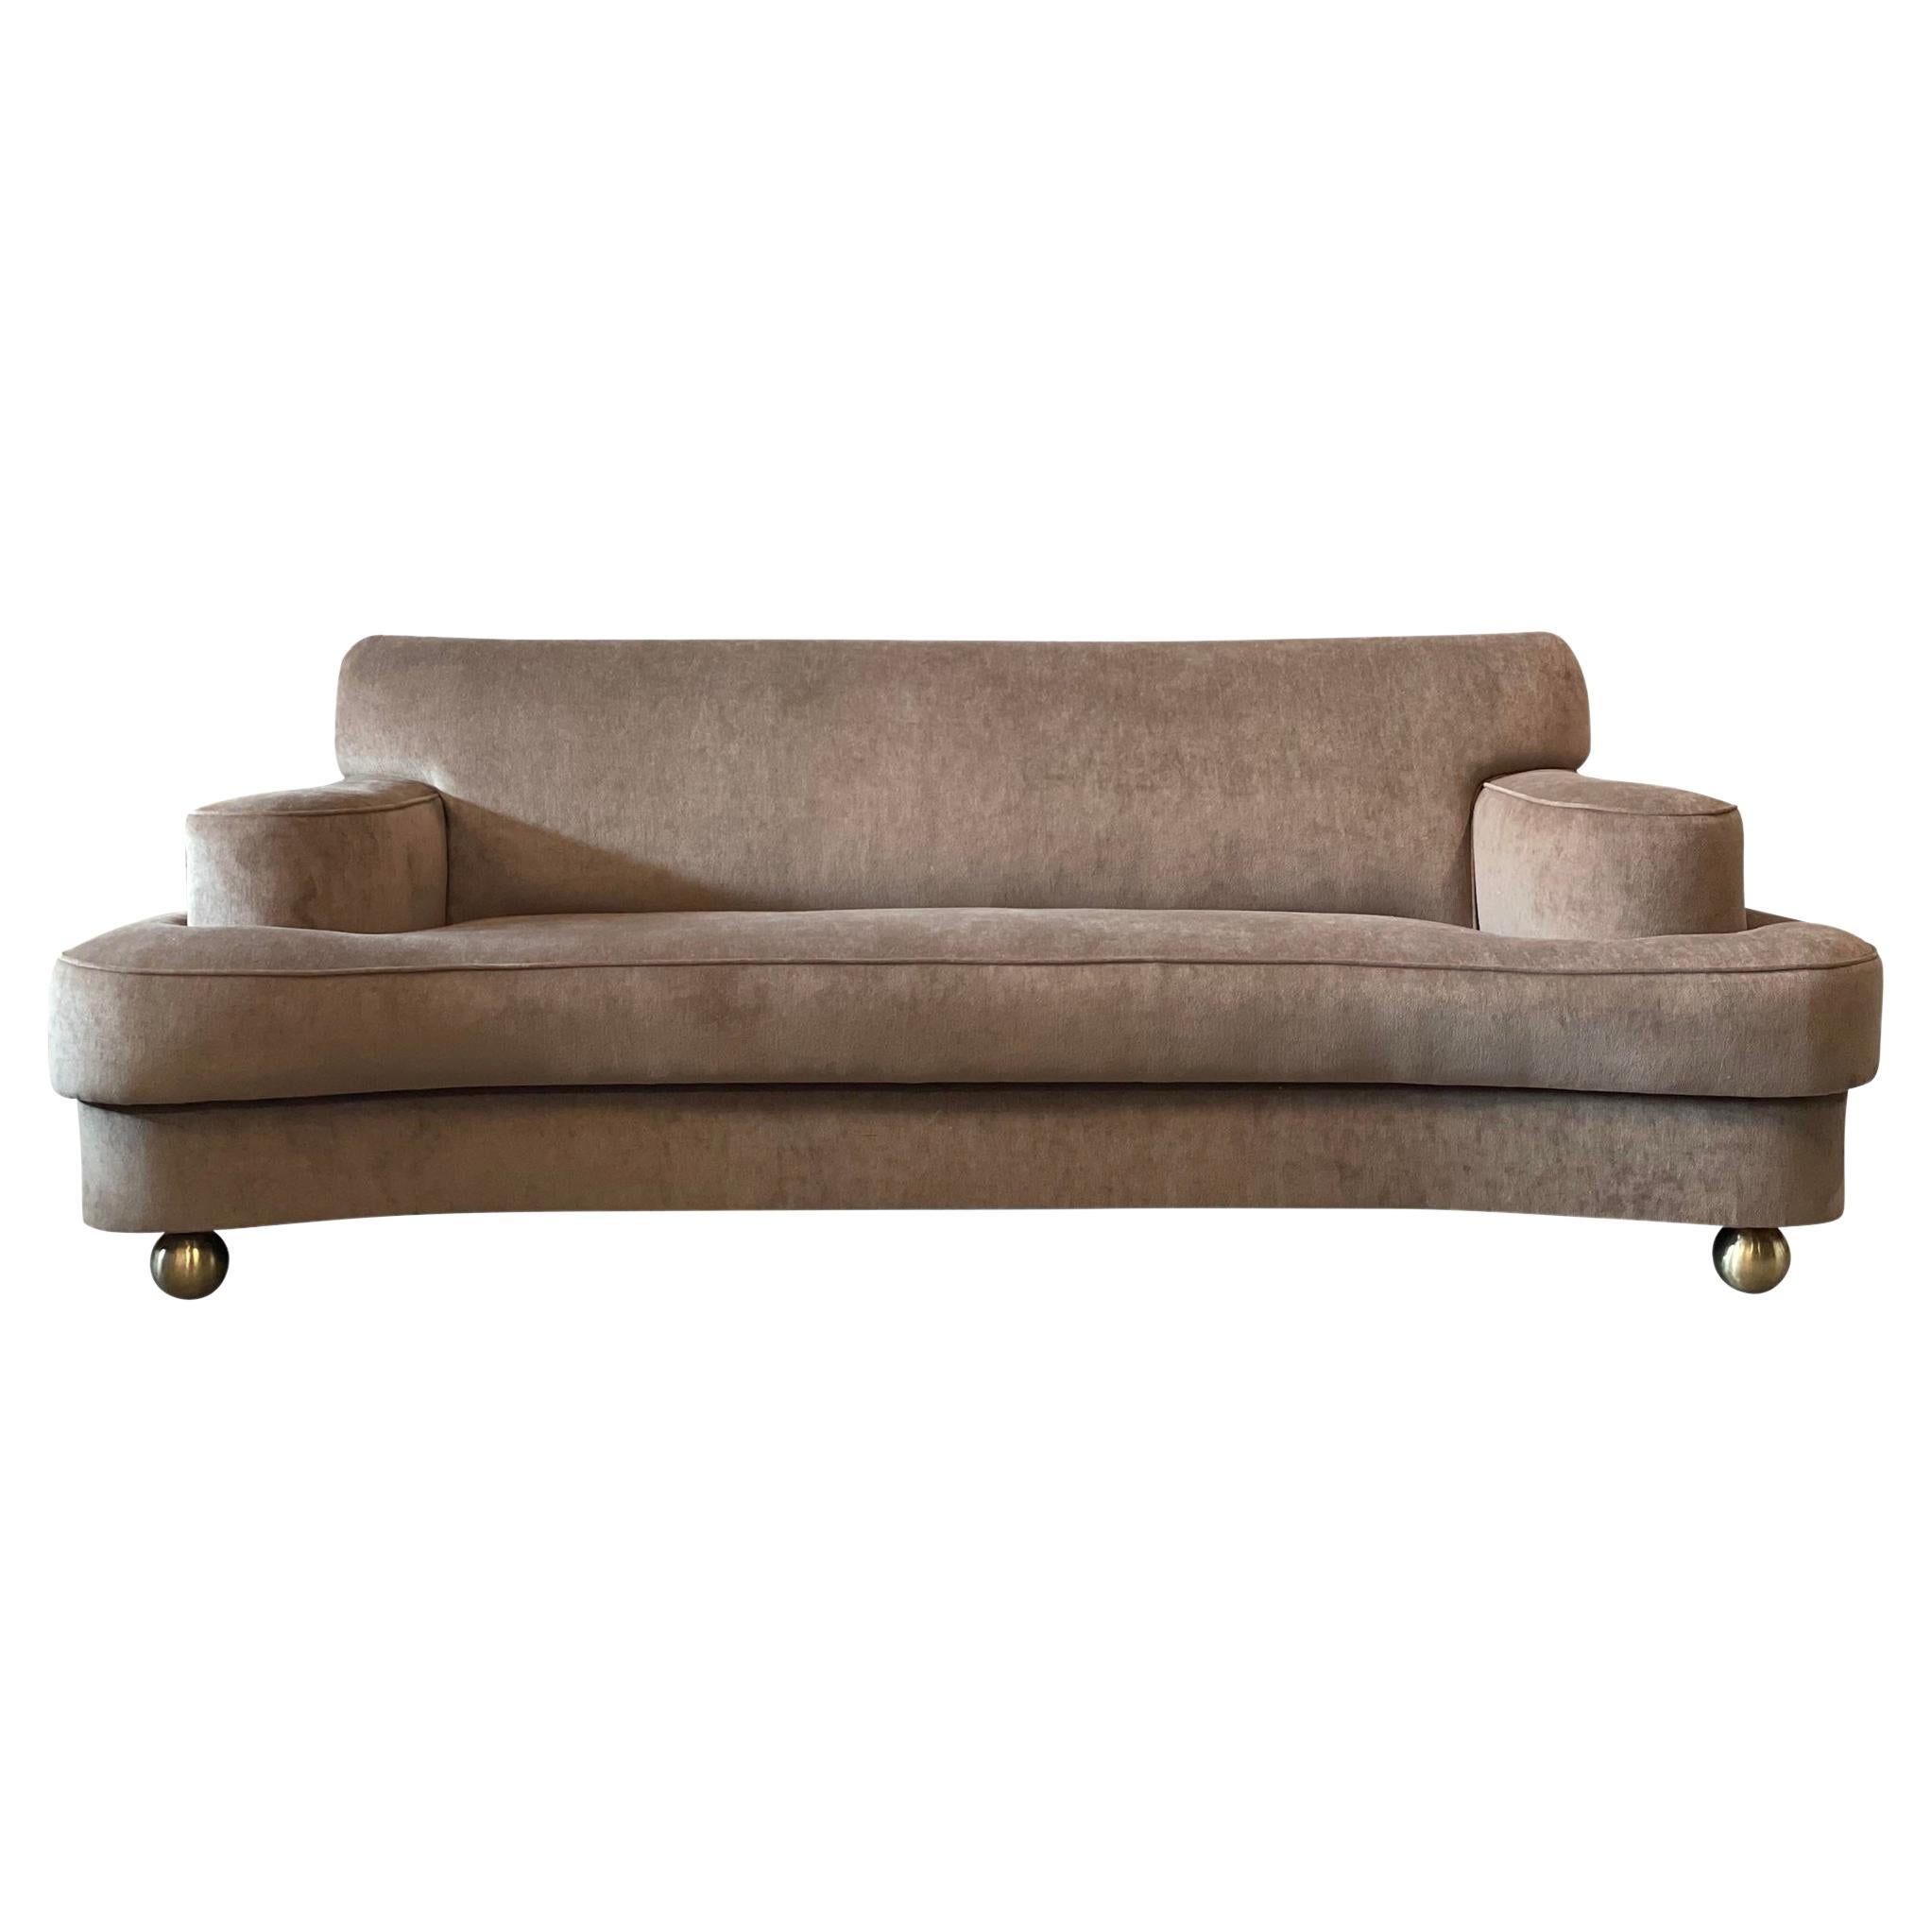 1940s Taupe Velvet Sofa with Brass Feet